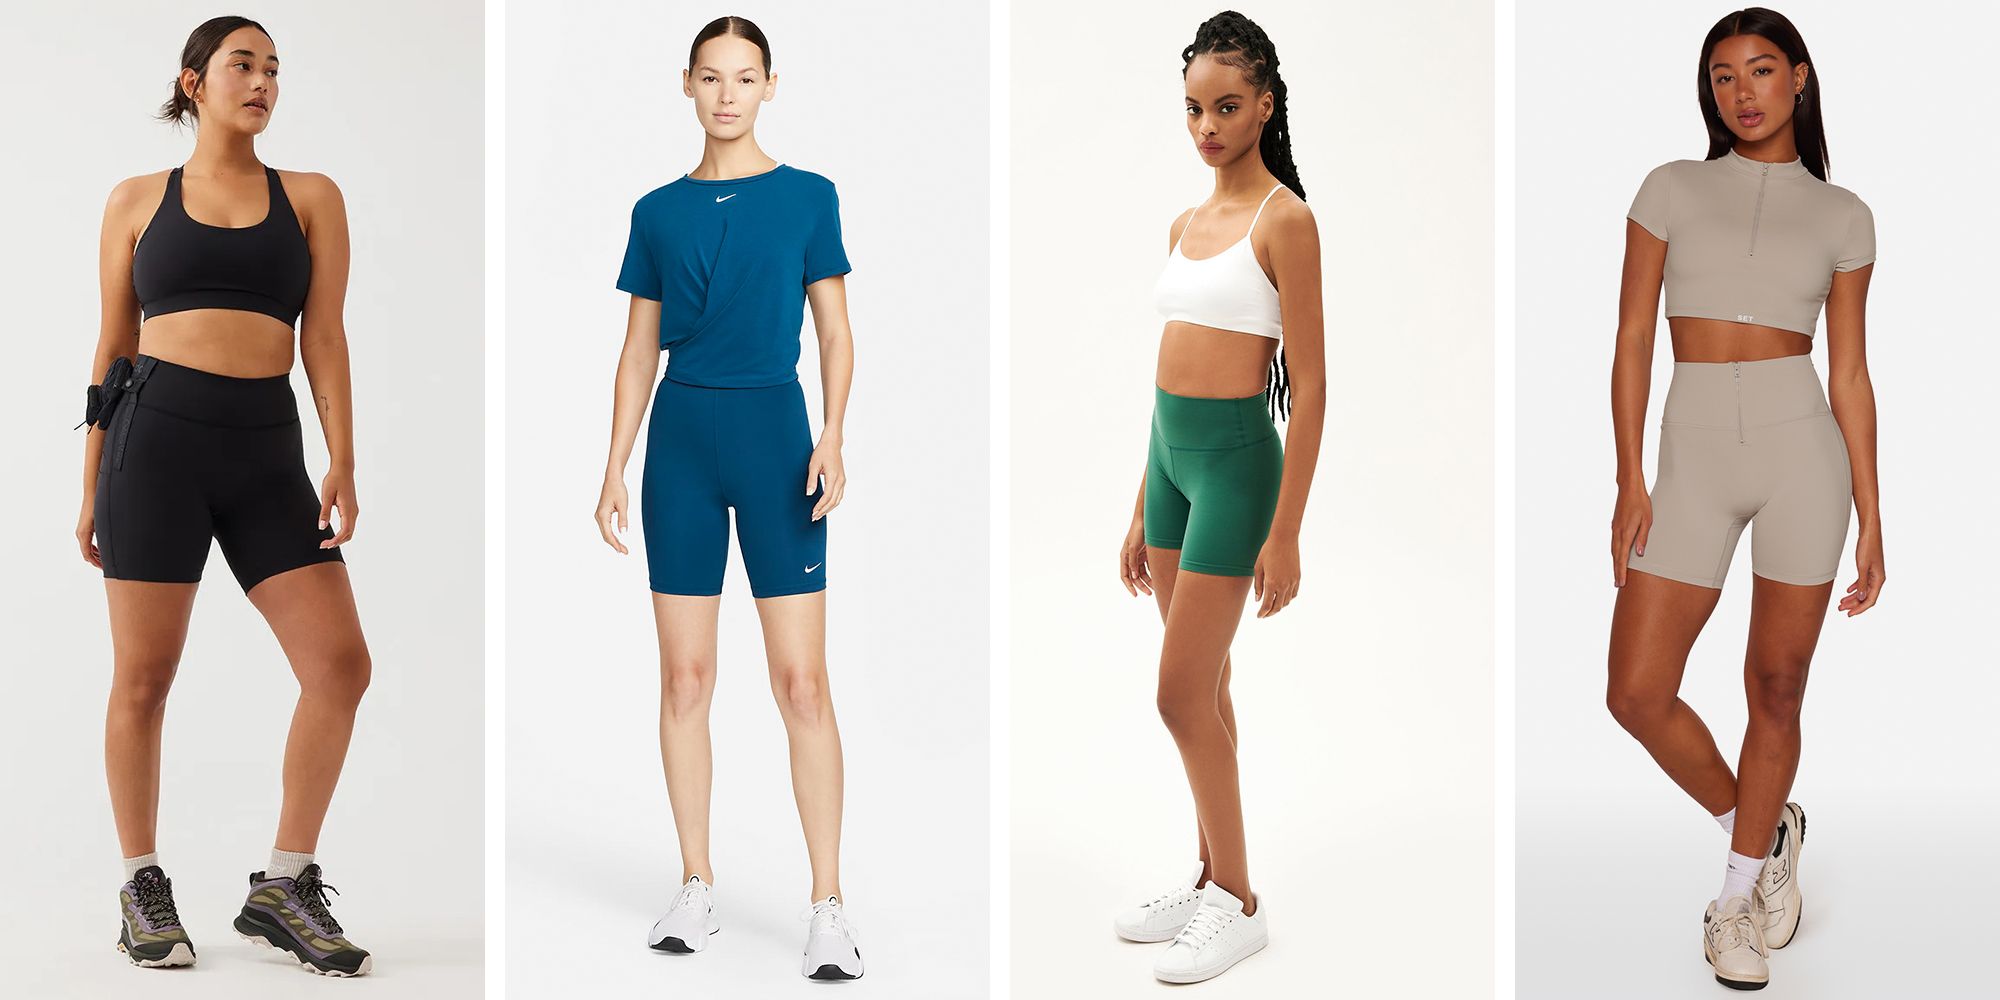 AUROLA 3 Pieces Pack Sets CAMO Workout Shorts for Women Seamless